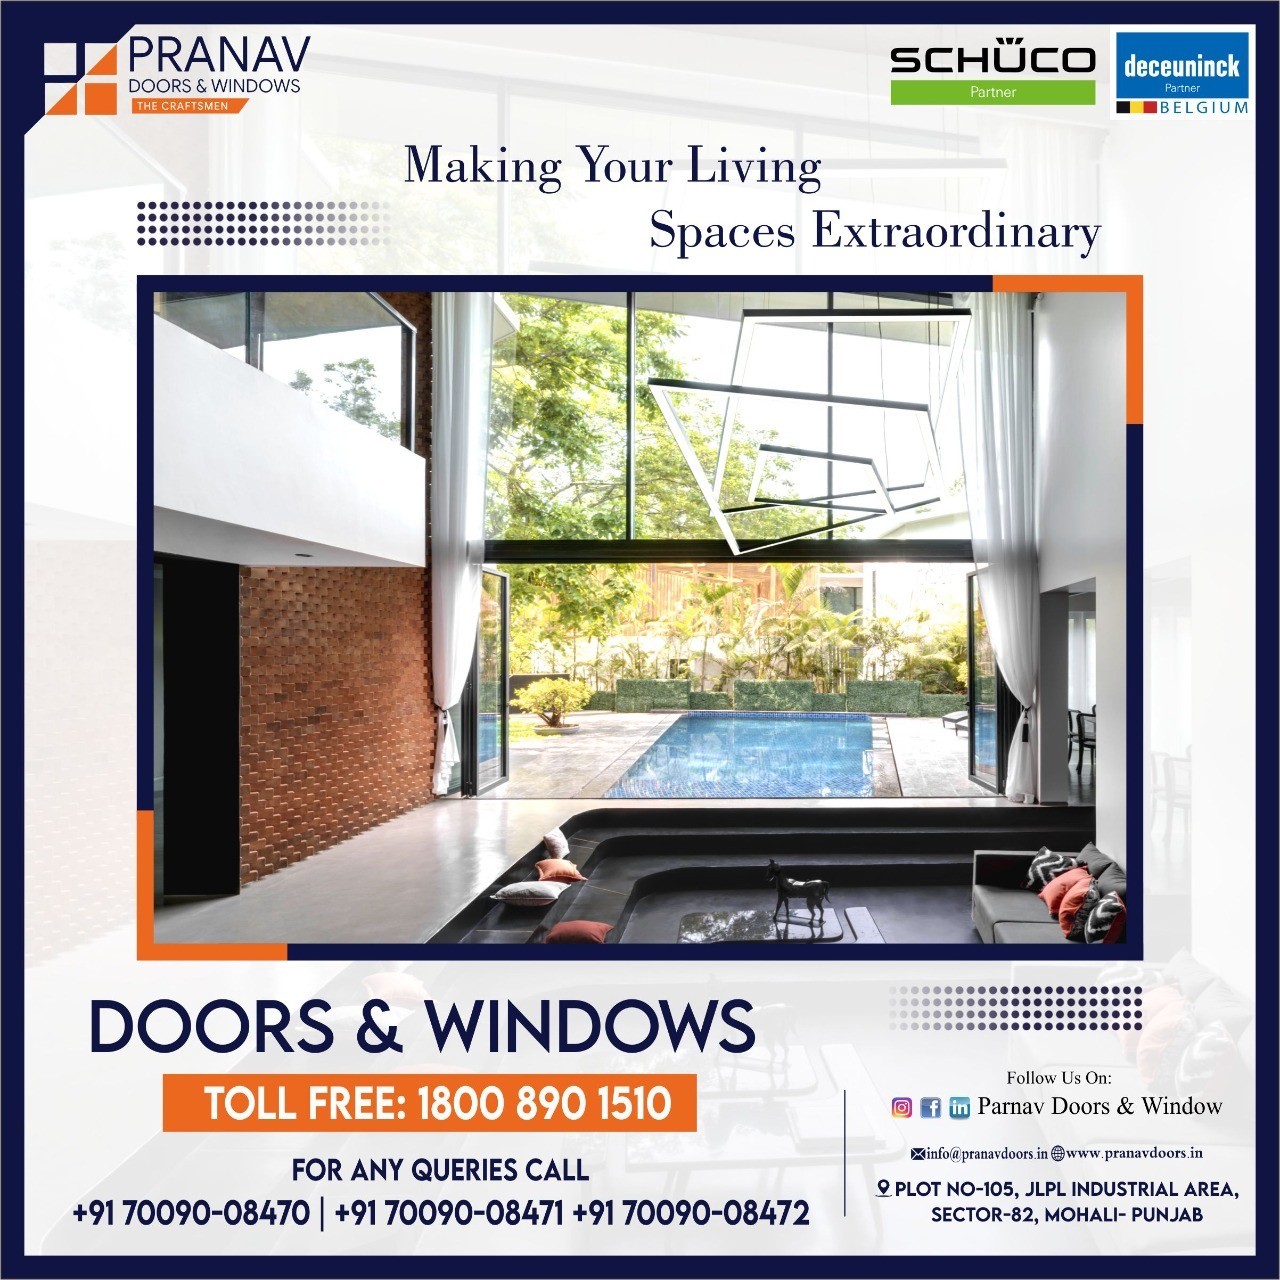 Aluminium Windows and Doors Manufacturer - Pranav Doors Windows